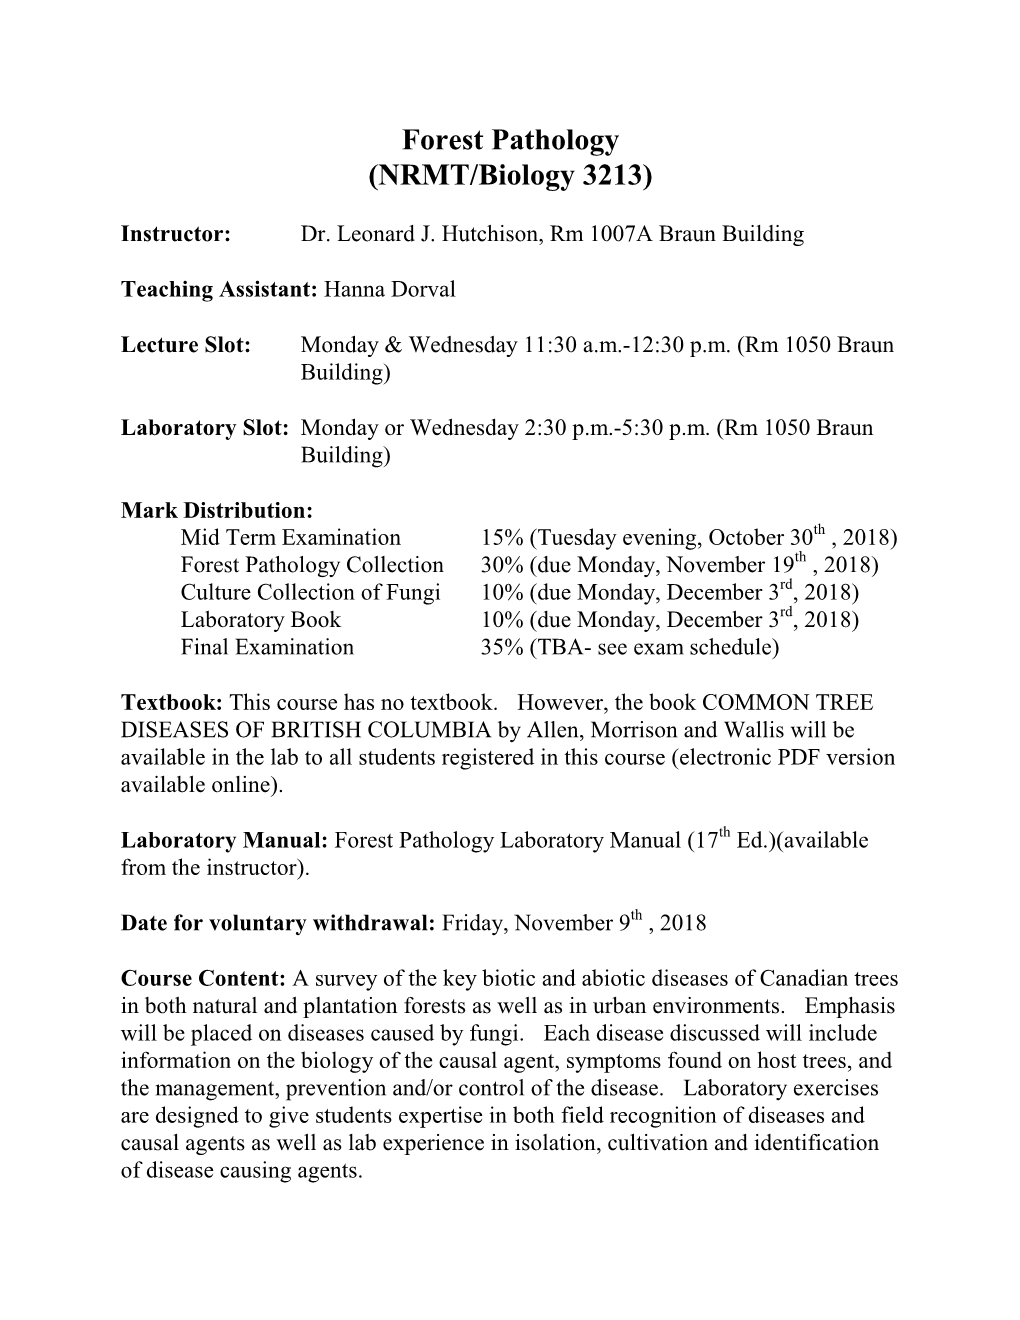 Forest Pathology (NRMT/Biology 3213)